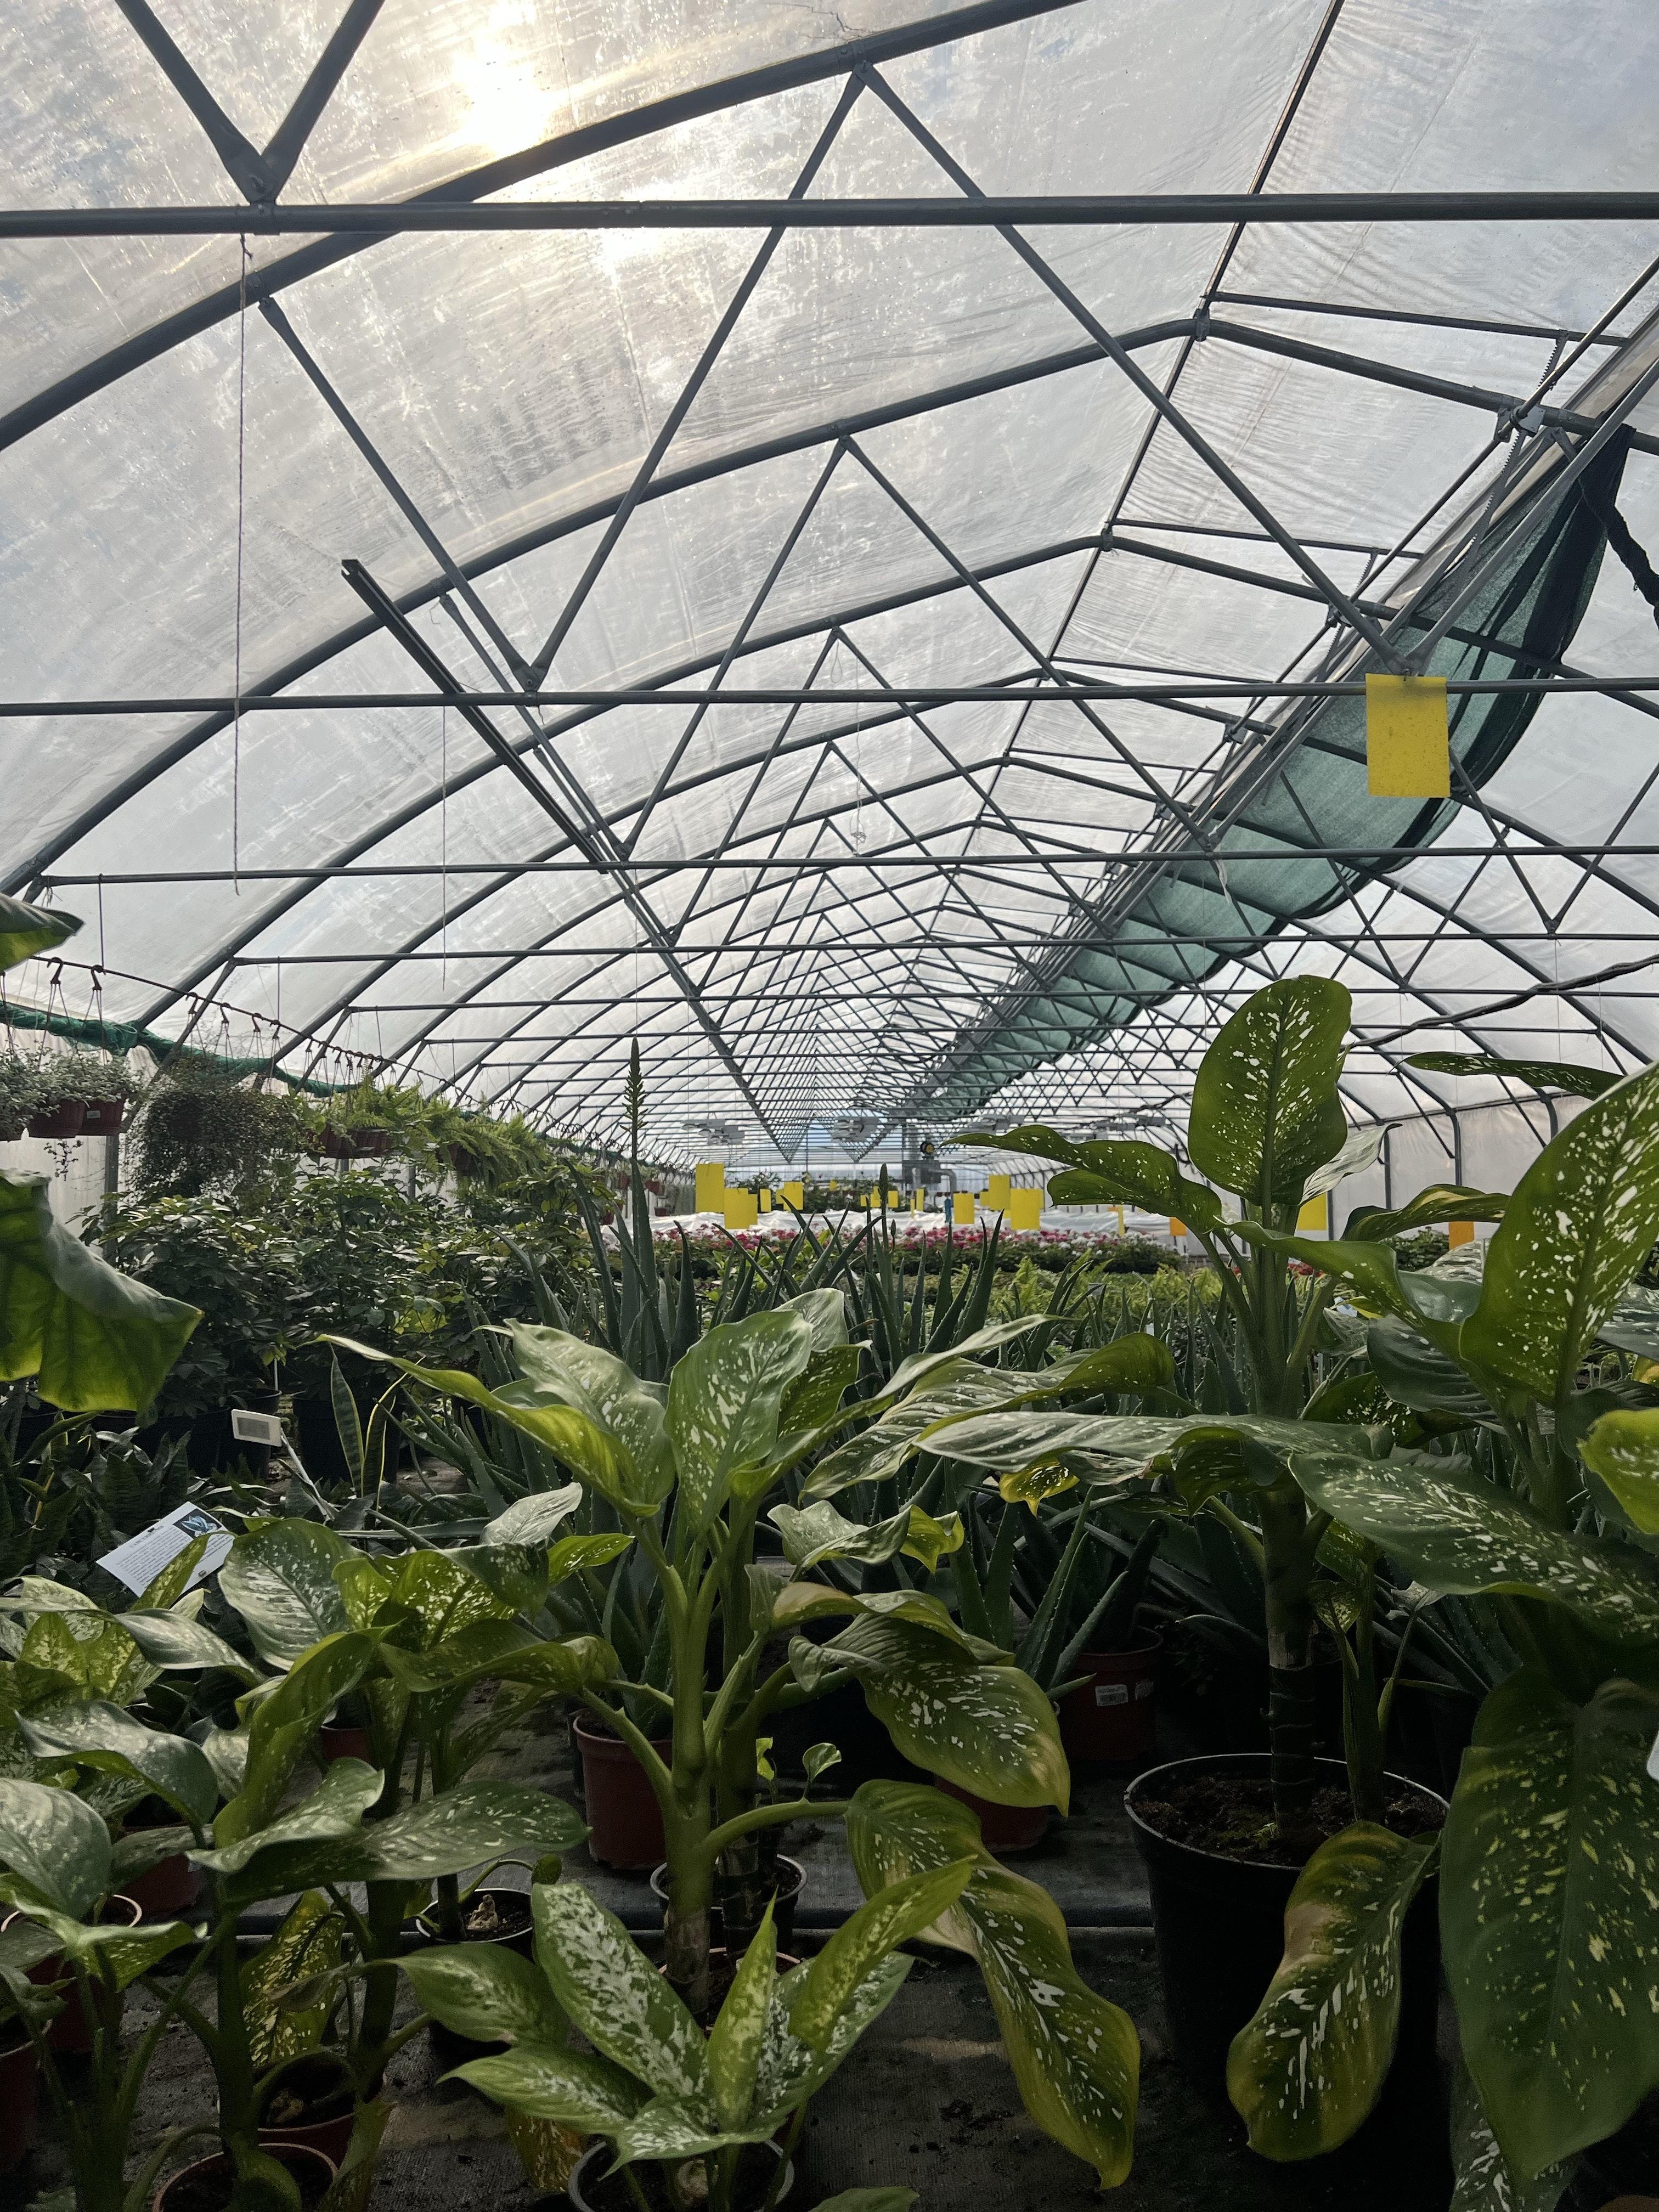 4000 sq ft greenhouse